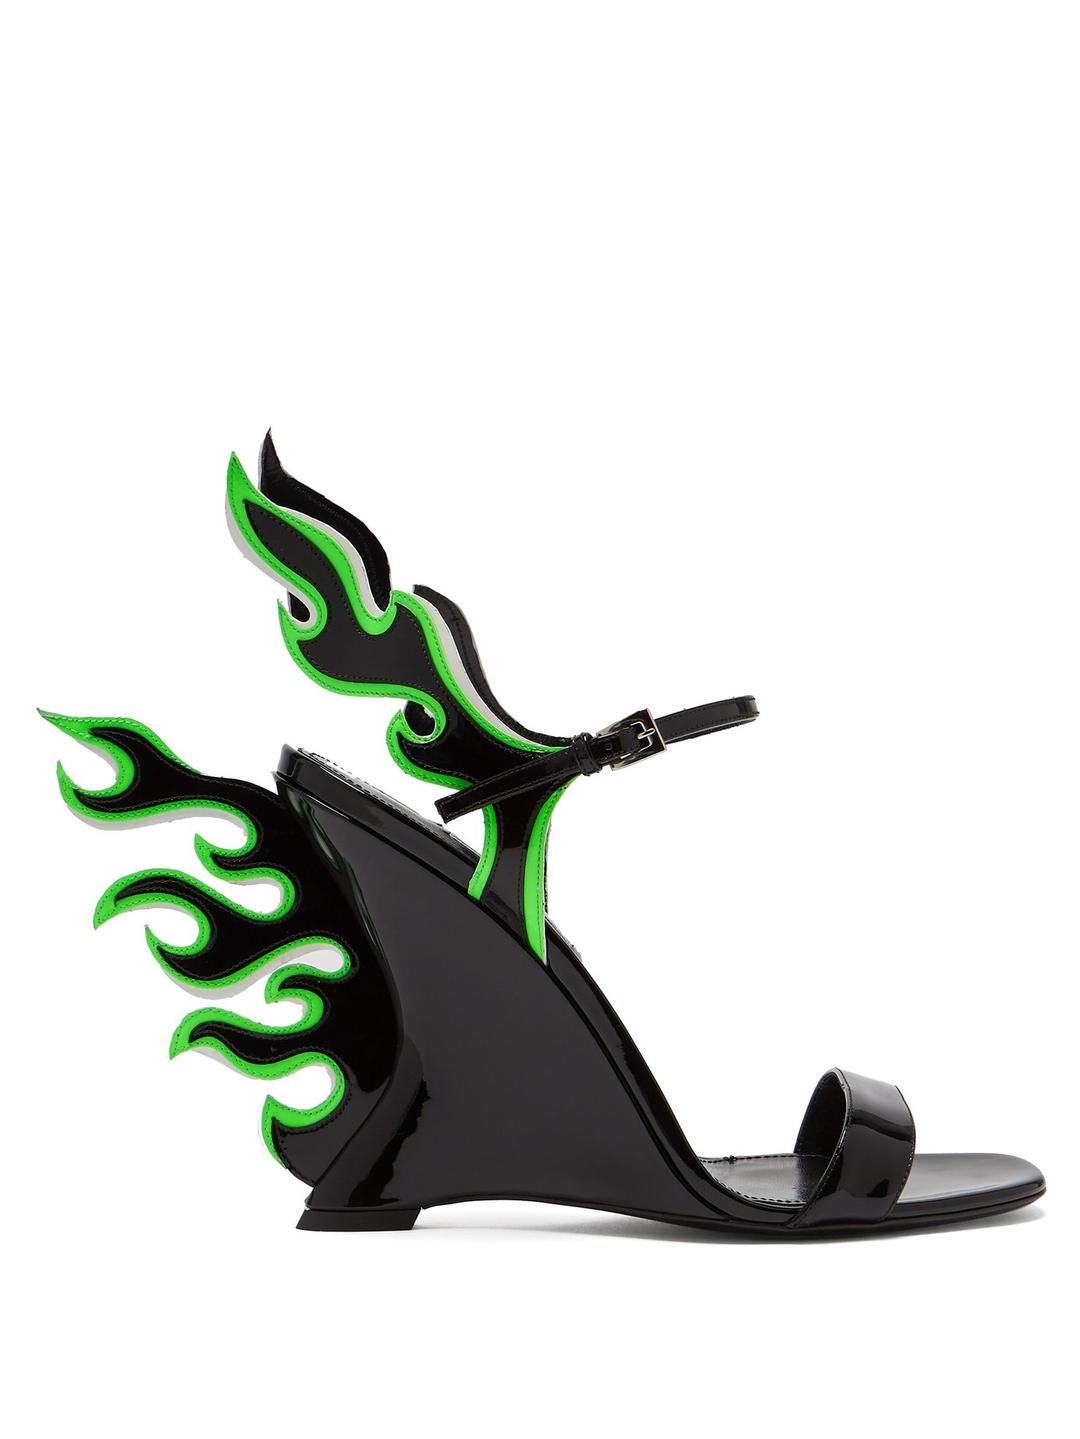 prada fire heels price